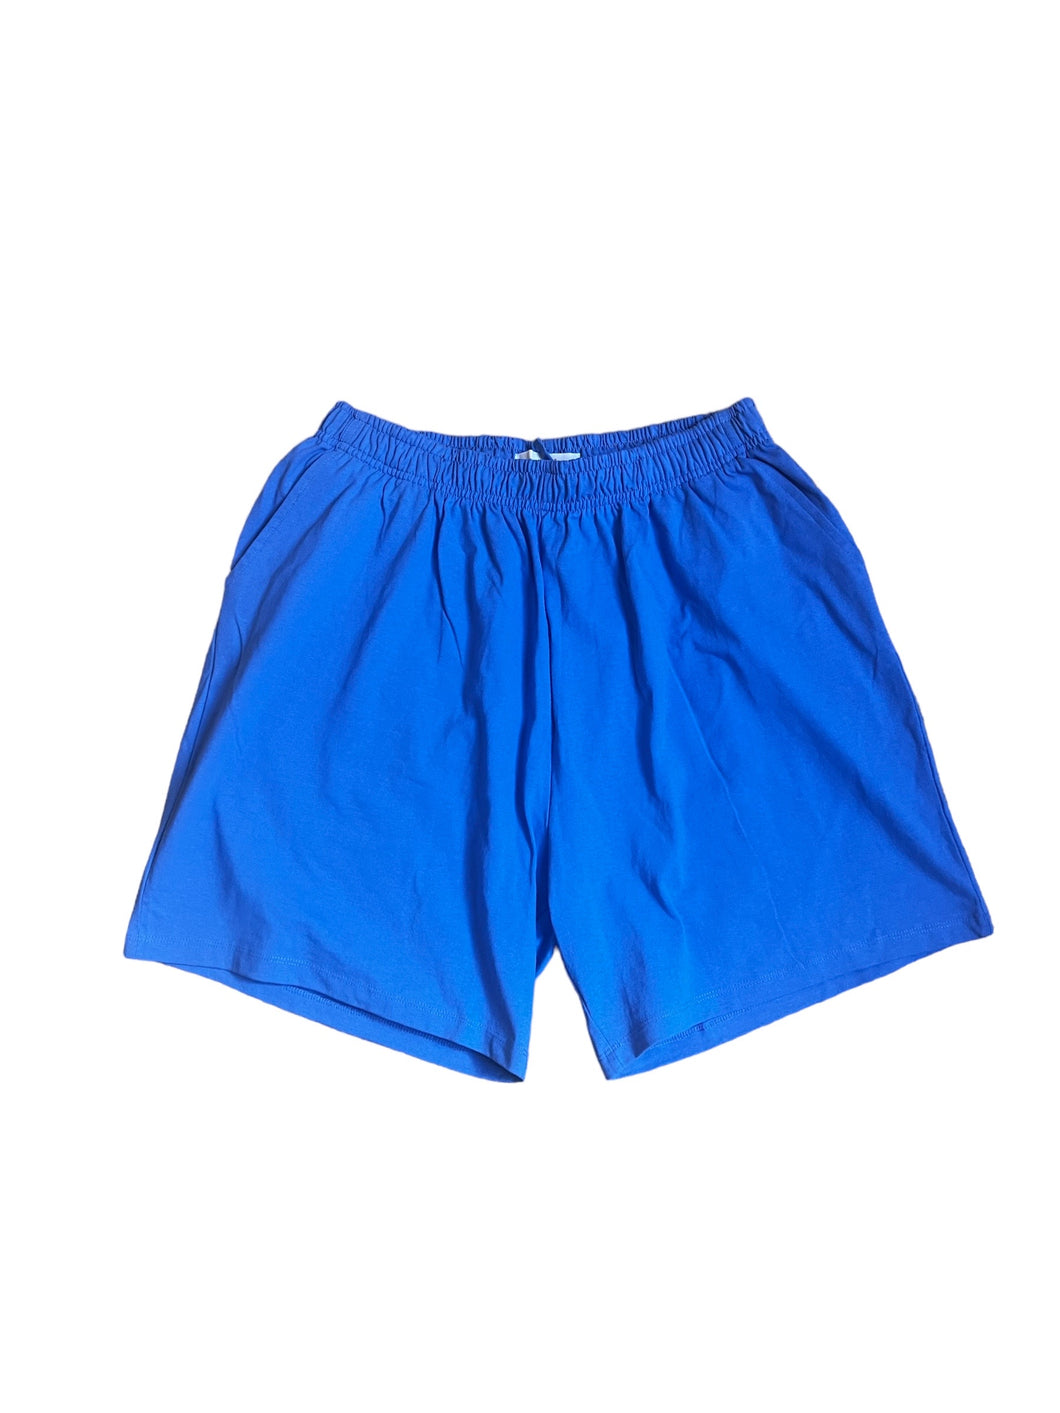 gOOOders Cotton Jogger Shorts - Blue